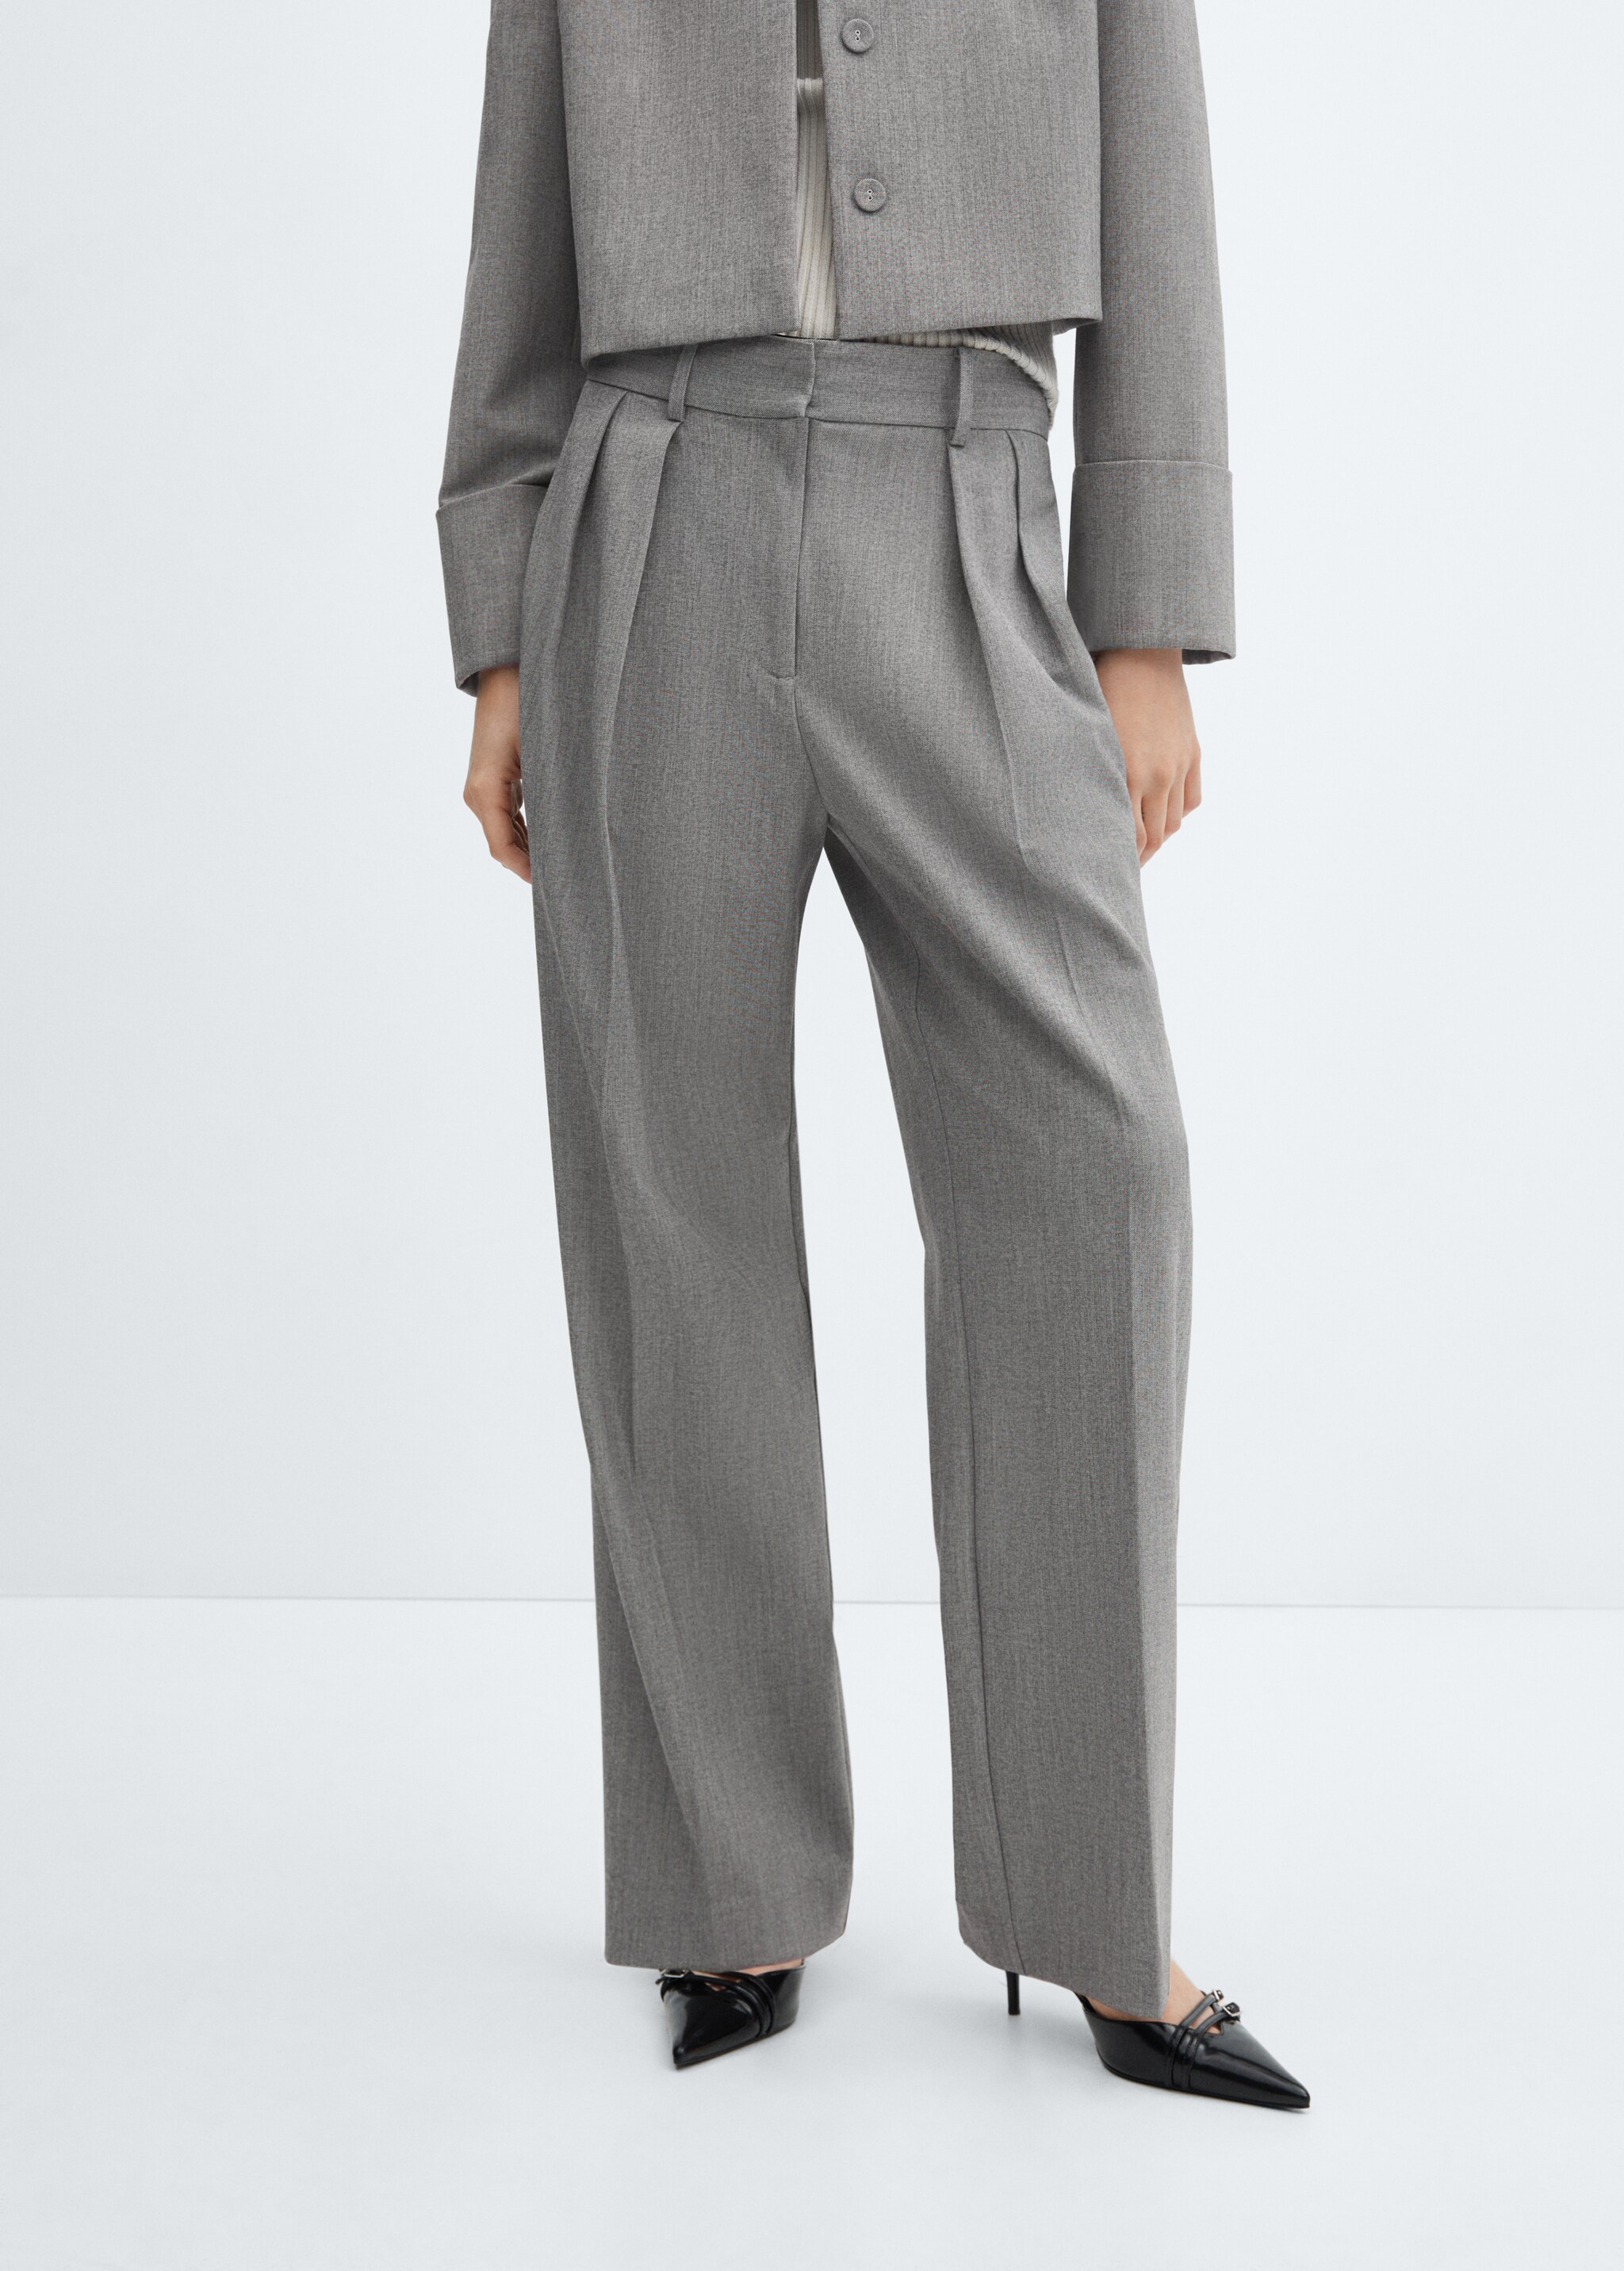 Pleated suit trousers - Medium plane